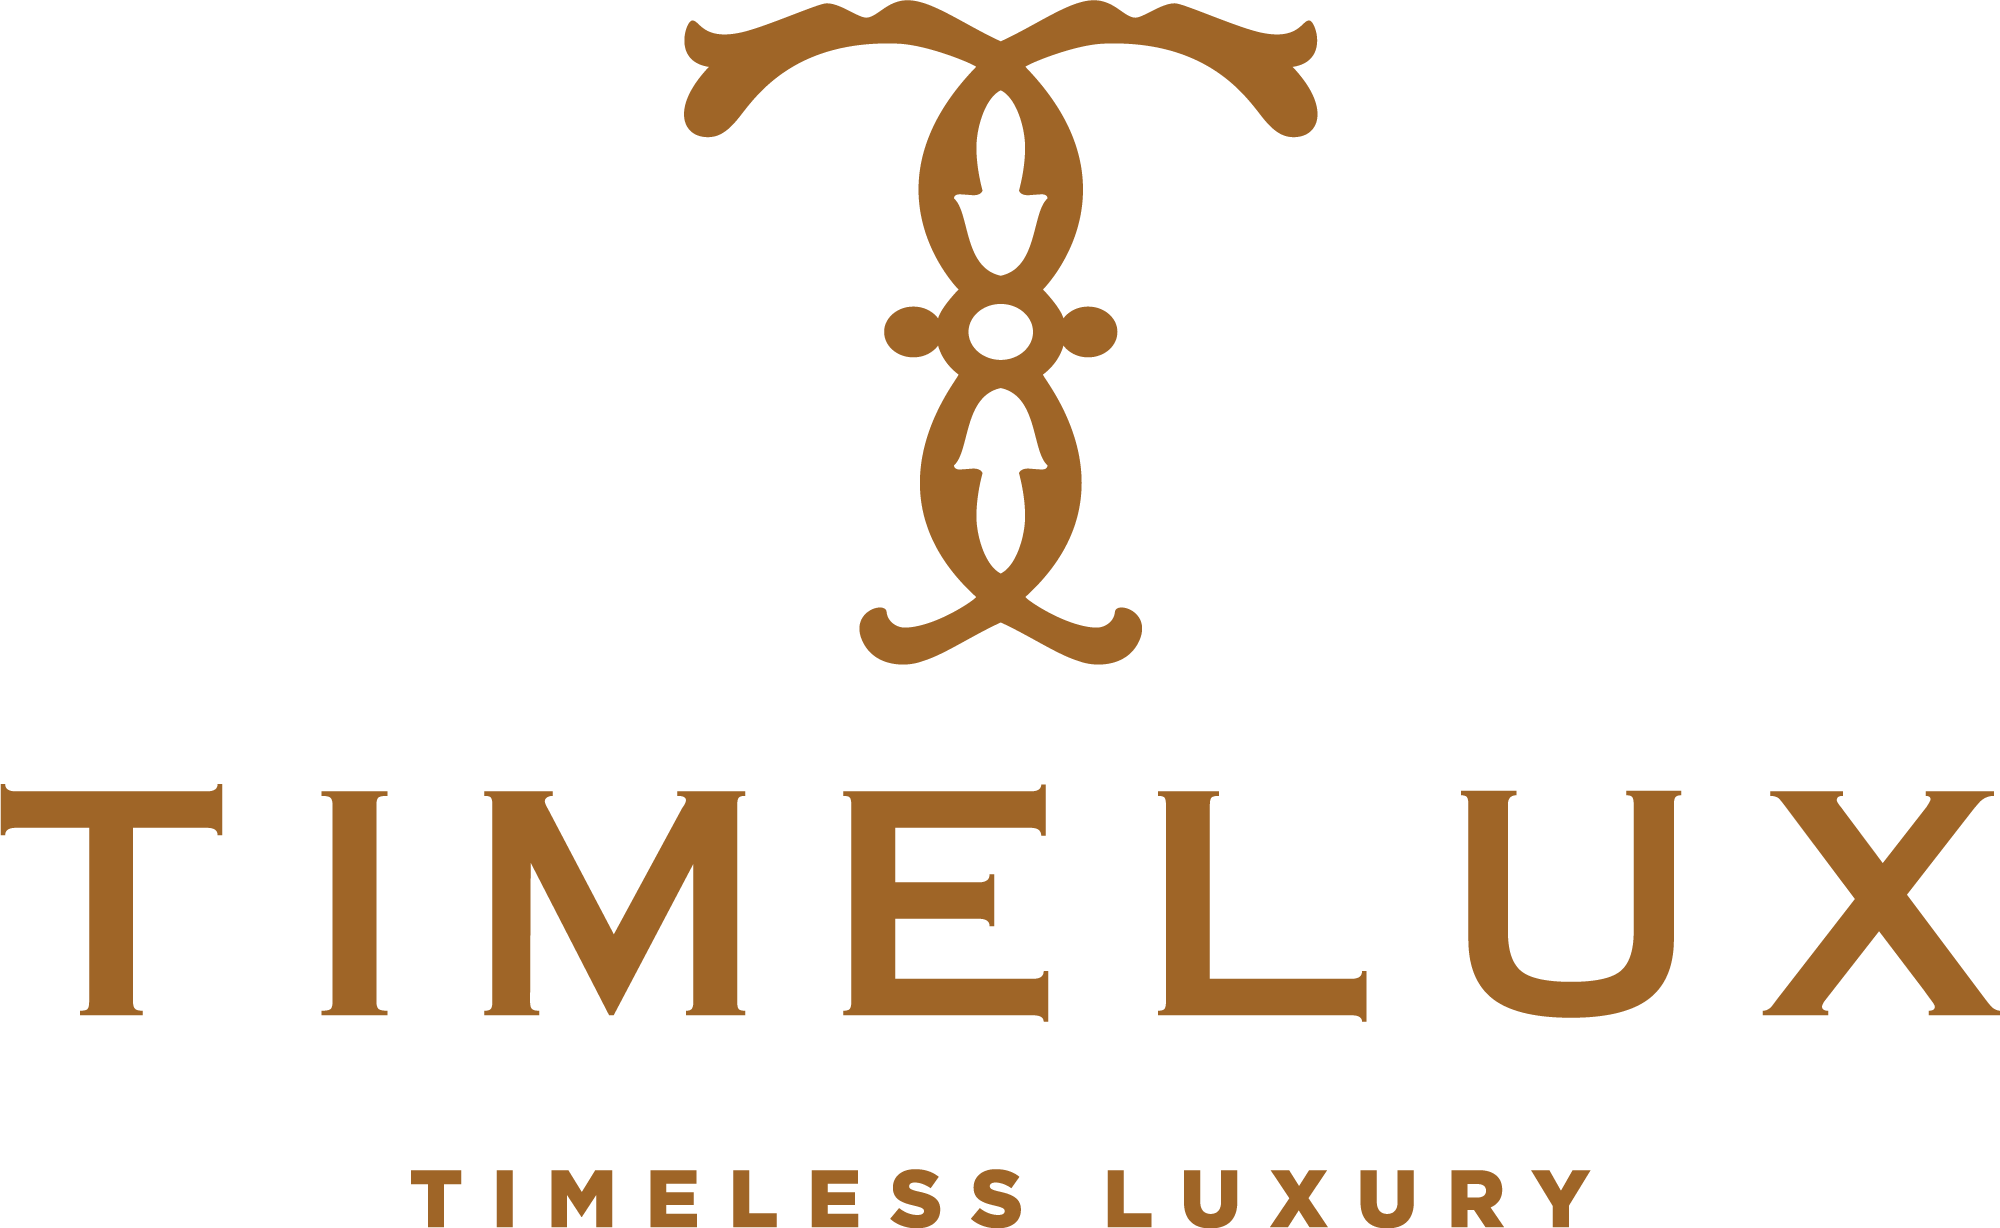 Timelux logo